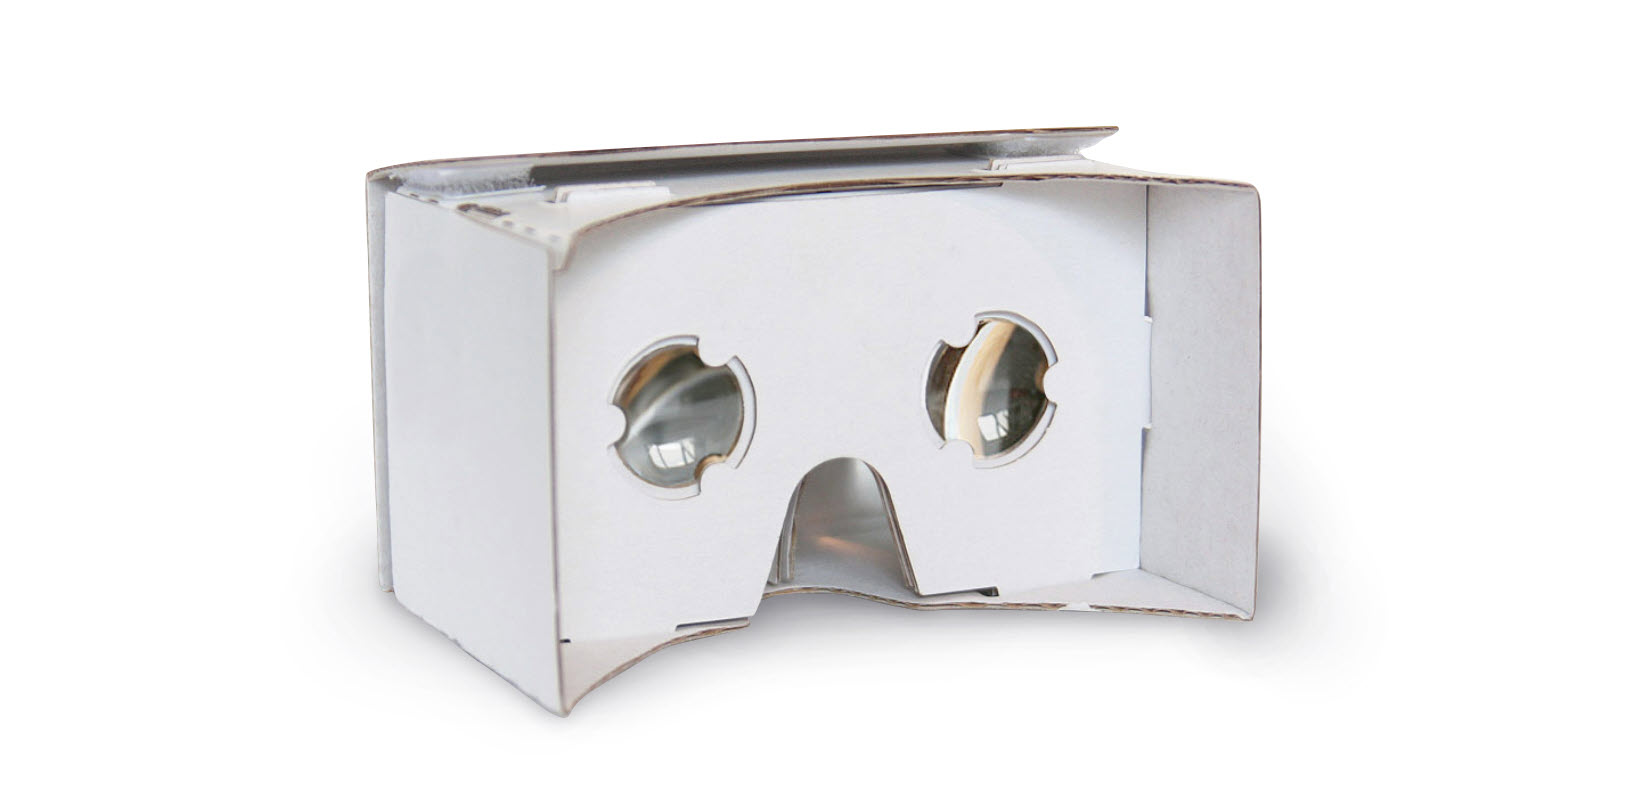 Goodle-Cardboard-Kits-eweb360-virtual-reality-rentals